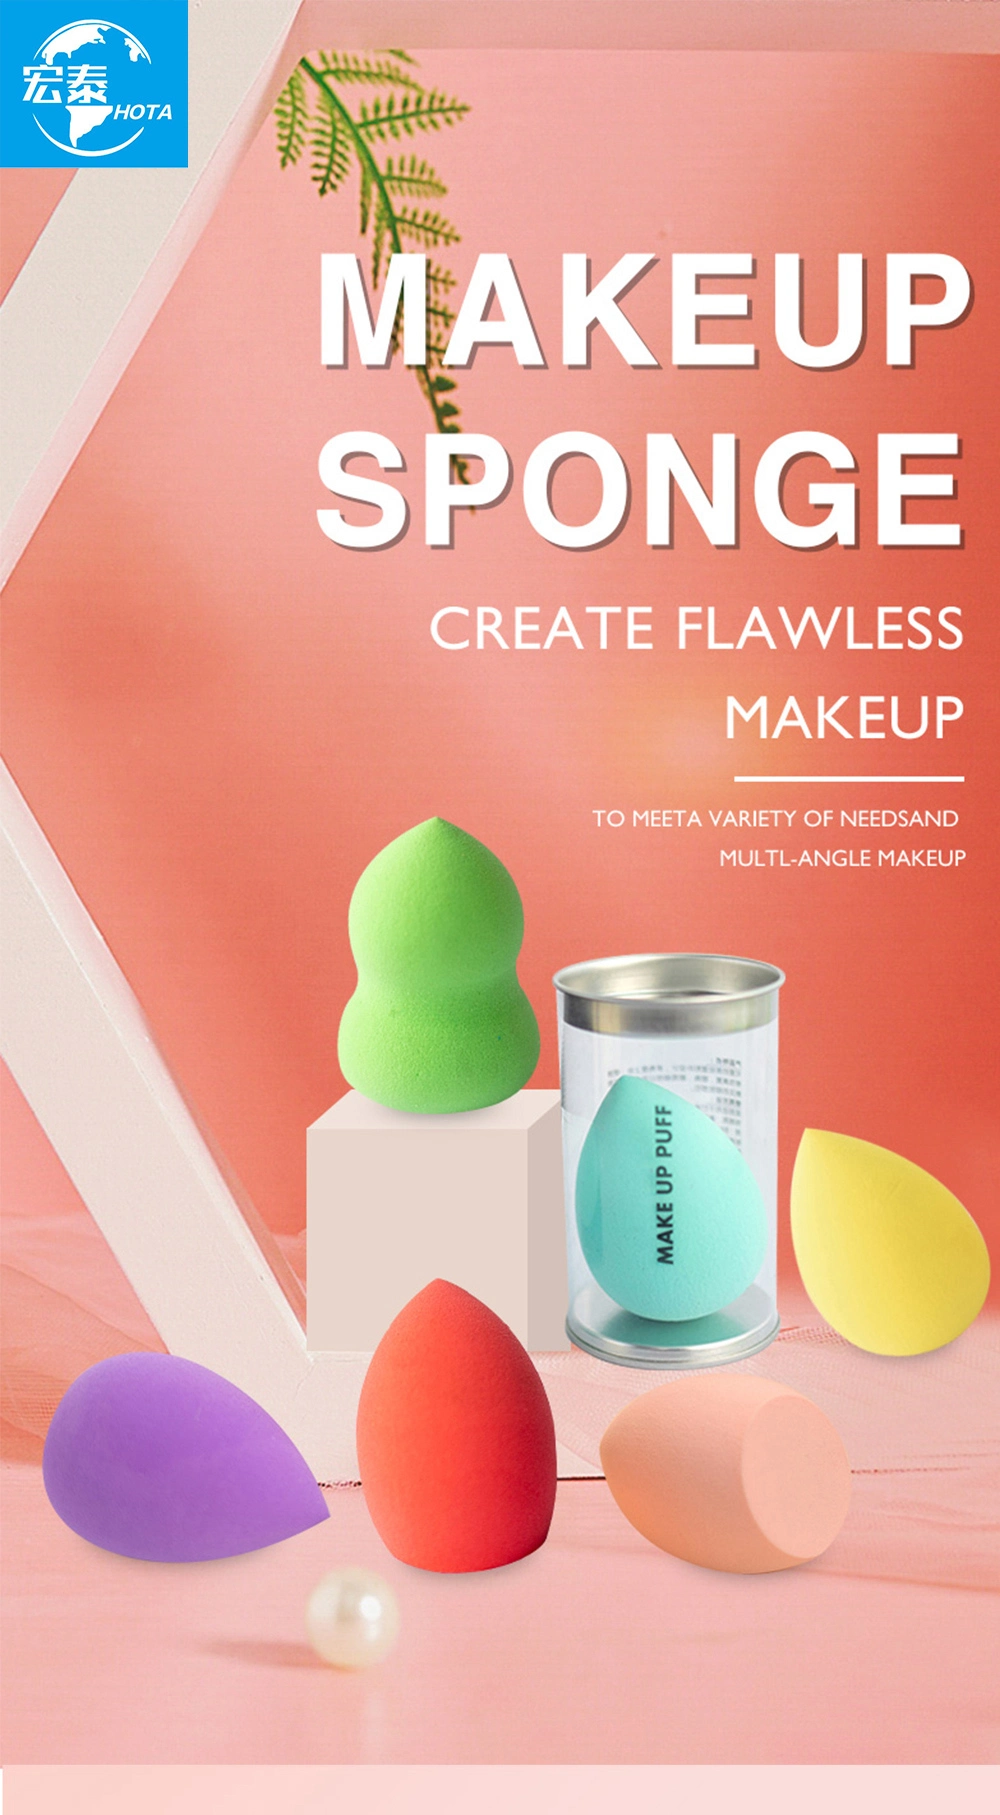 Wholesales Face Cosmetic Powder Makeup Puff Makeup Sponge Set Beauty Makeup Blender